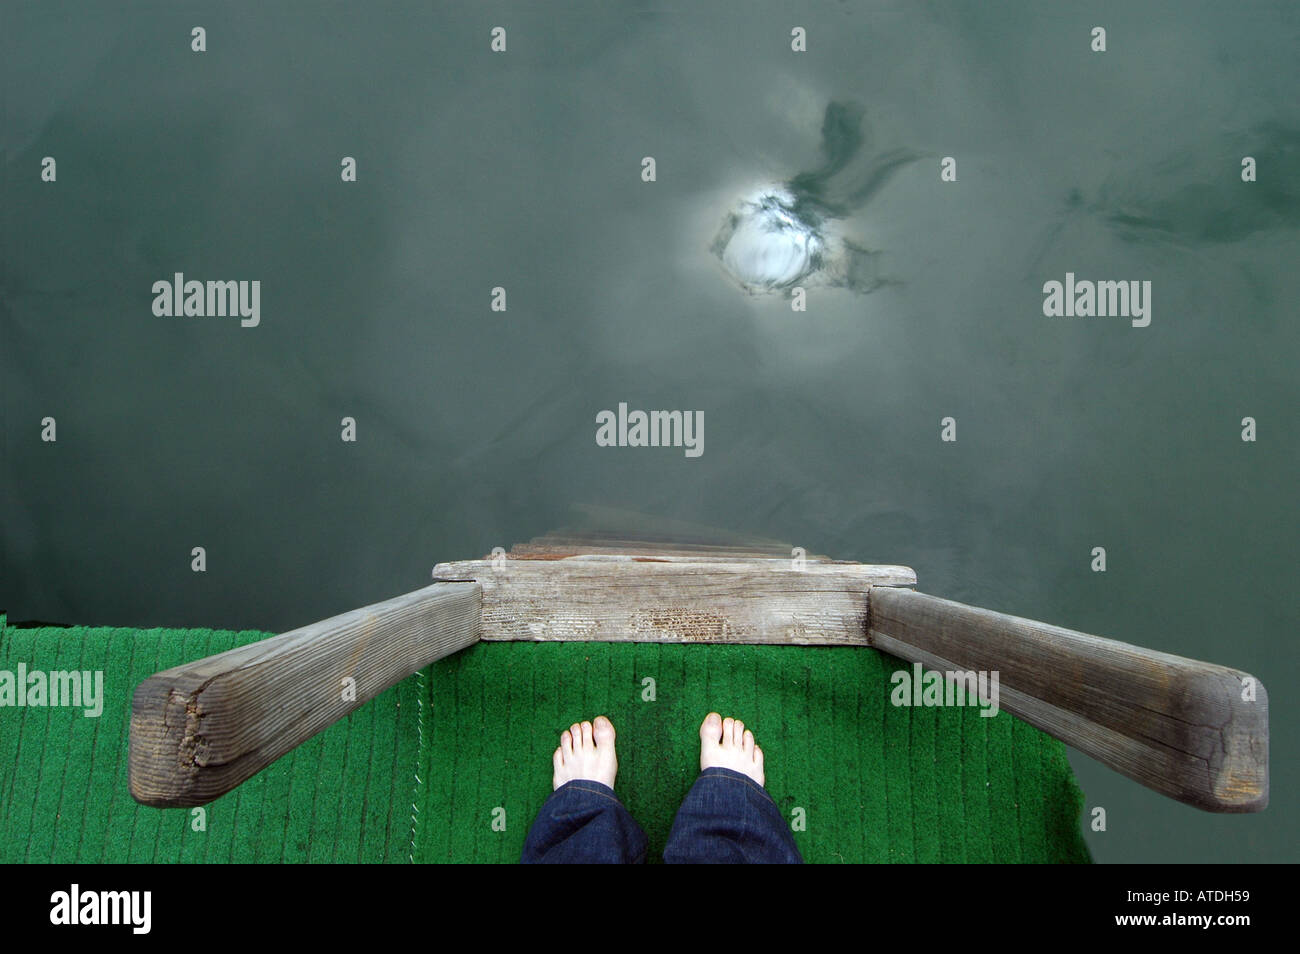 Barefoot on planks at Lake Stock Photo